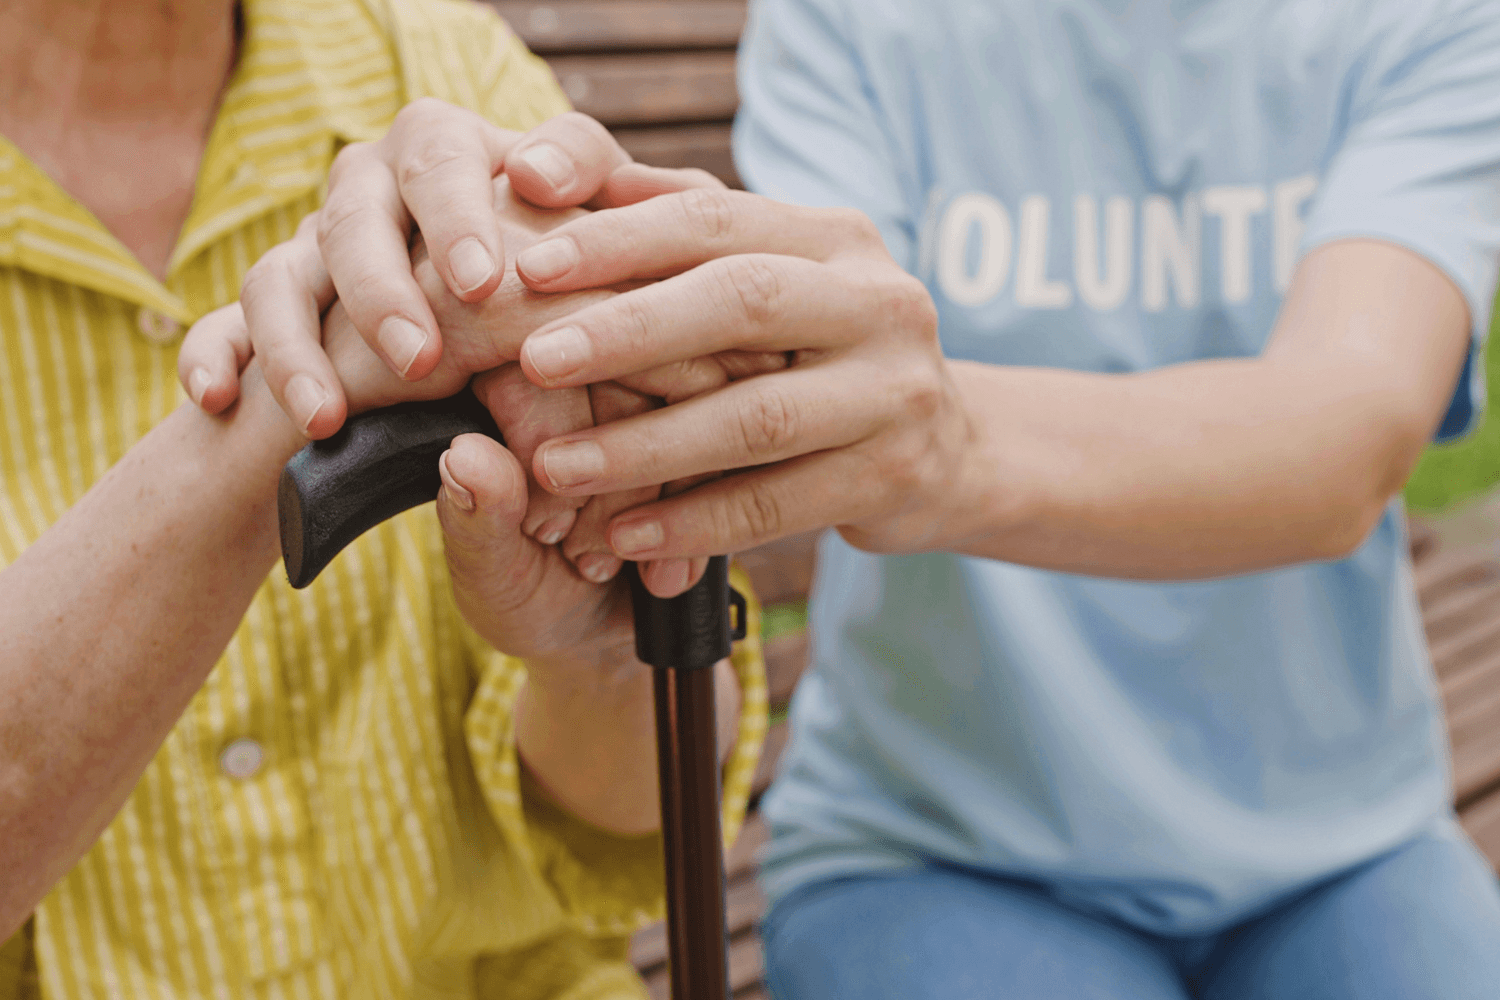 Volunteering to help the elderly